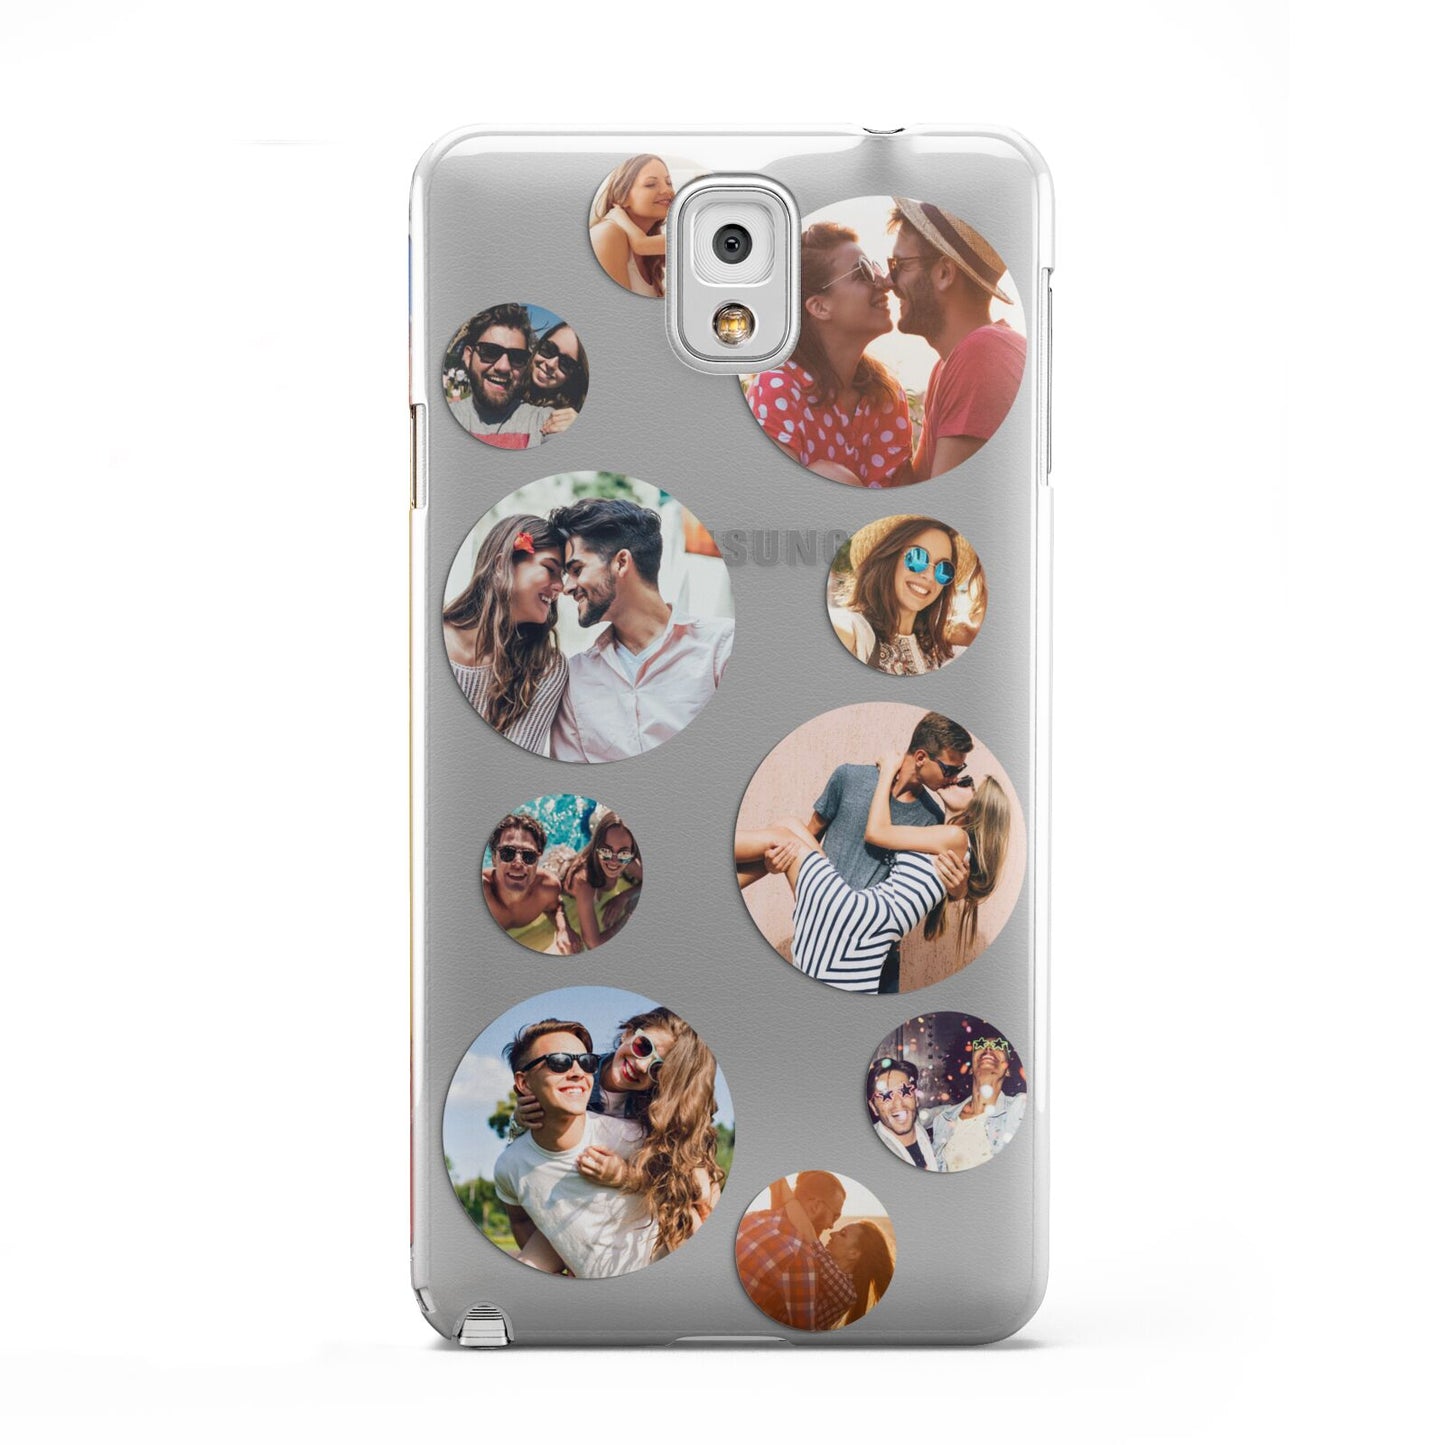 Multi Circular Photo Collage Upload Samsung Galaxy Note 3 Case